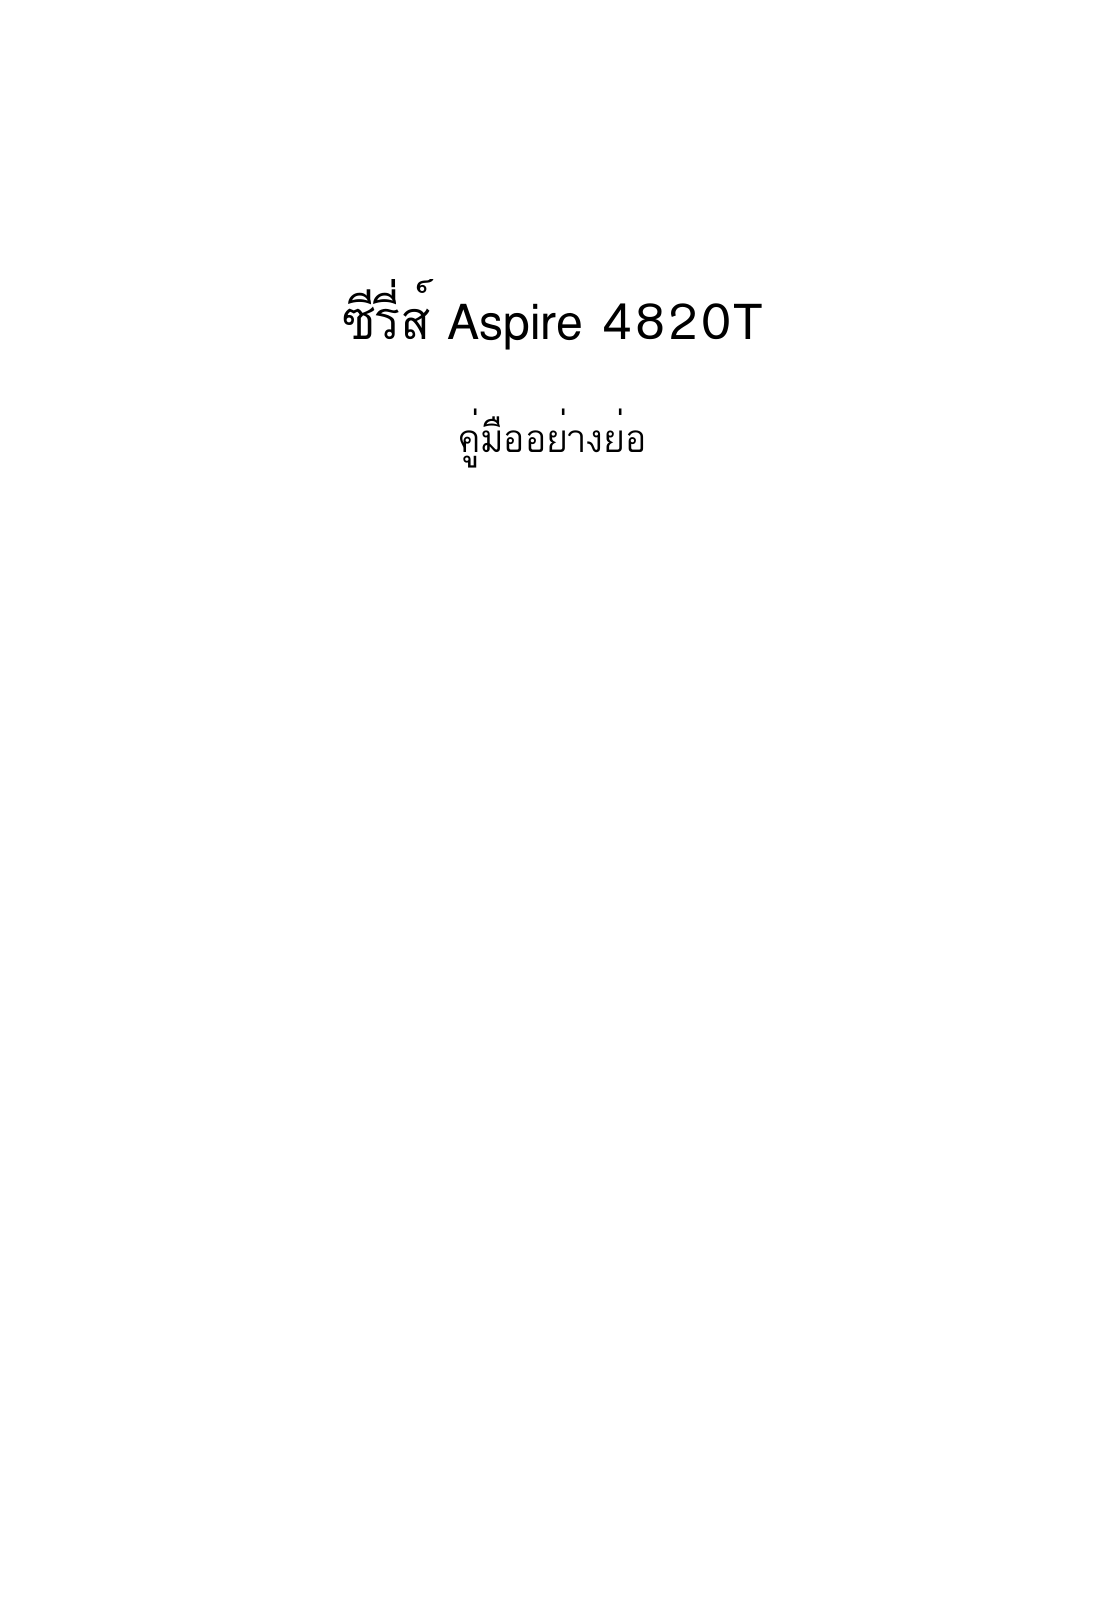 Acer ASPIRE 4820TZ, ASPIRE 4820TG, ASPIRE 4820TZG, ASPIRE 4820T User Manual